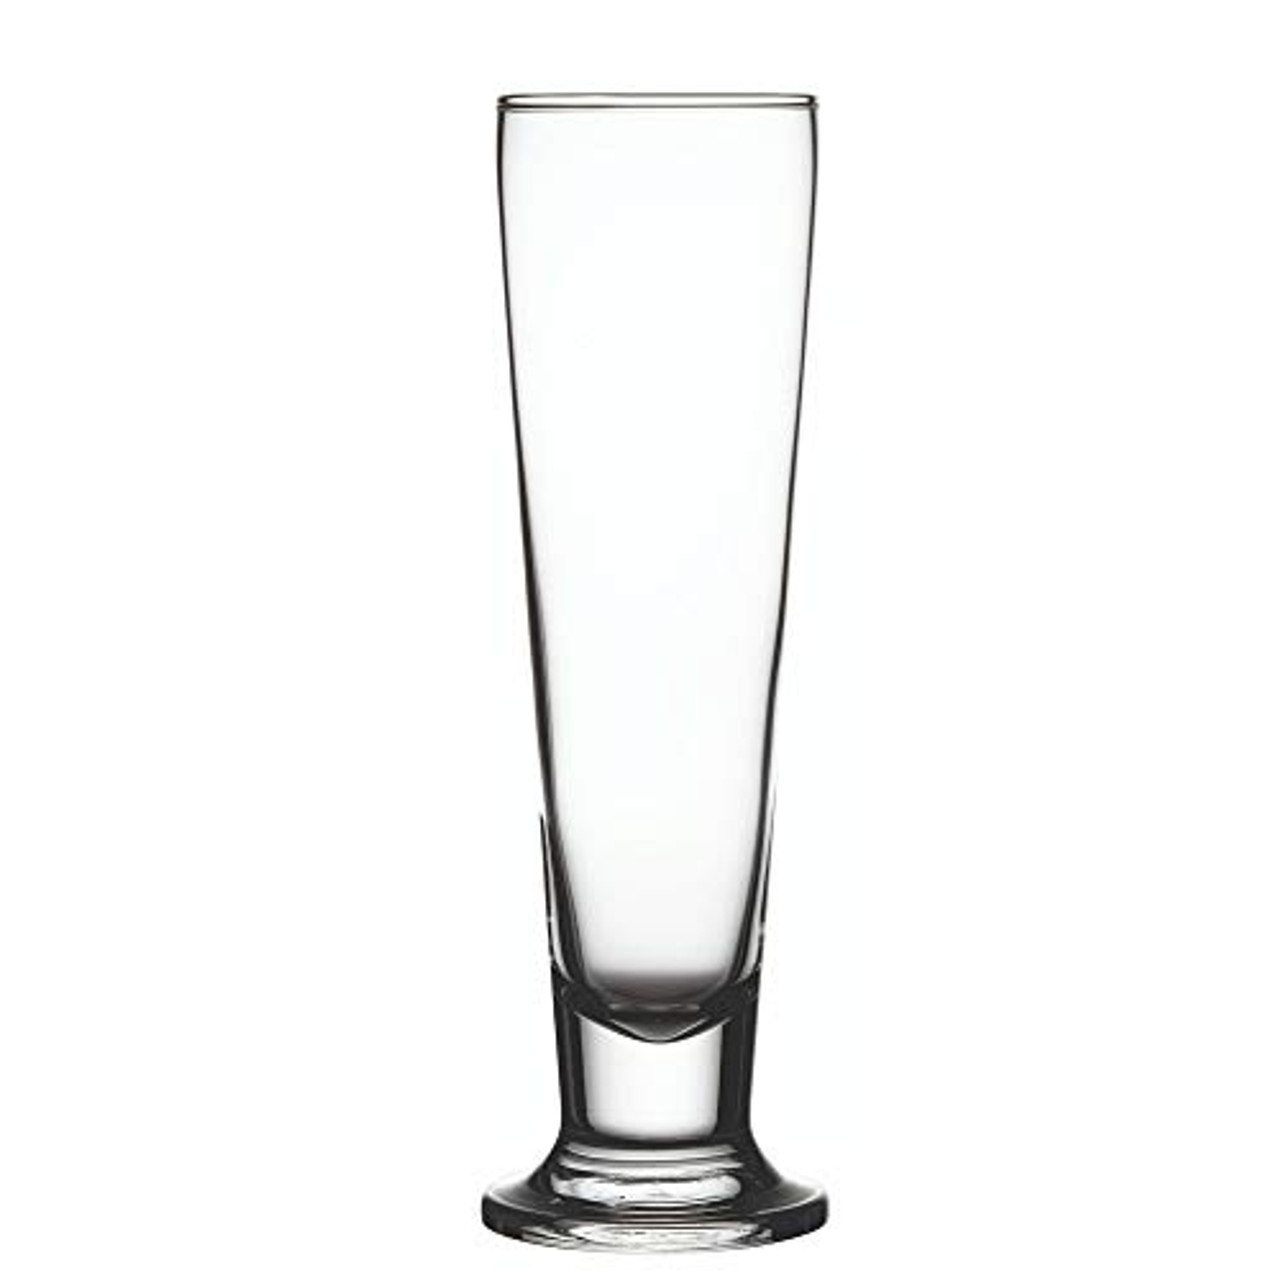 16 oz Craft Beer Pint Glass - Flared - 6 count box - Restaurantware